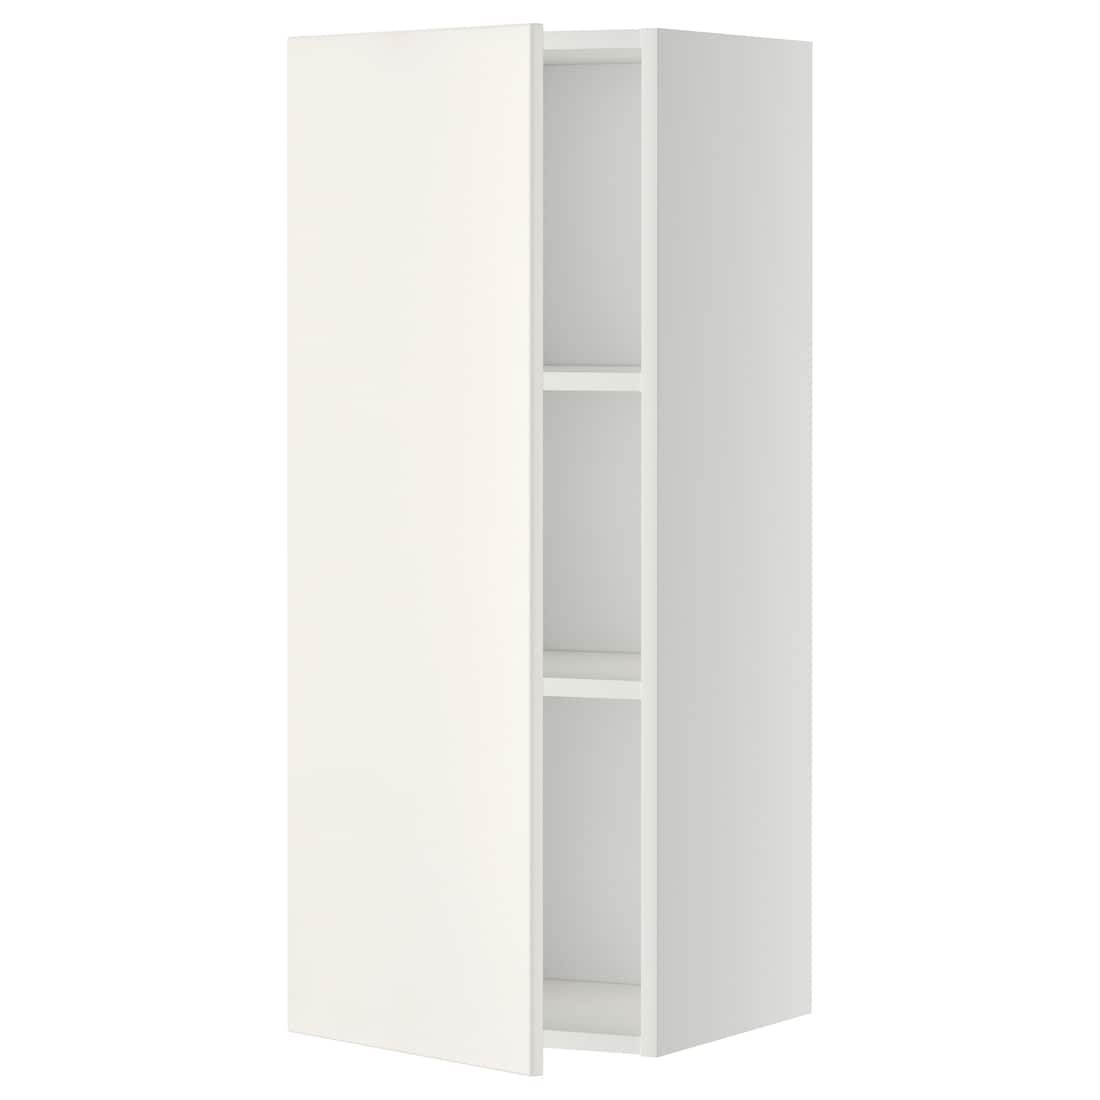 IKEA METOD МЕТОД Шкаф навесной с полками, белый / Veddinge белый, 40x100 см 89460178 894.601.78